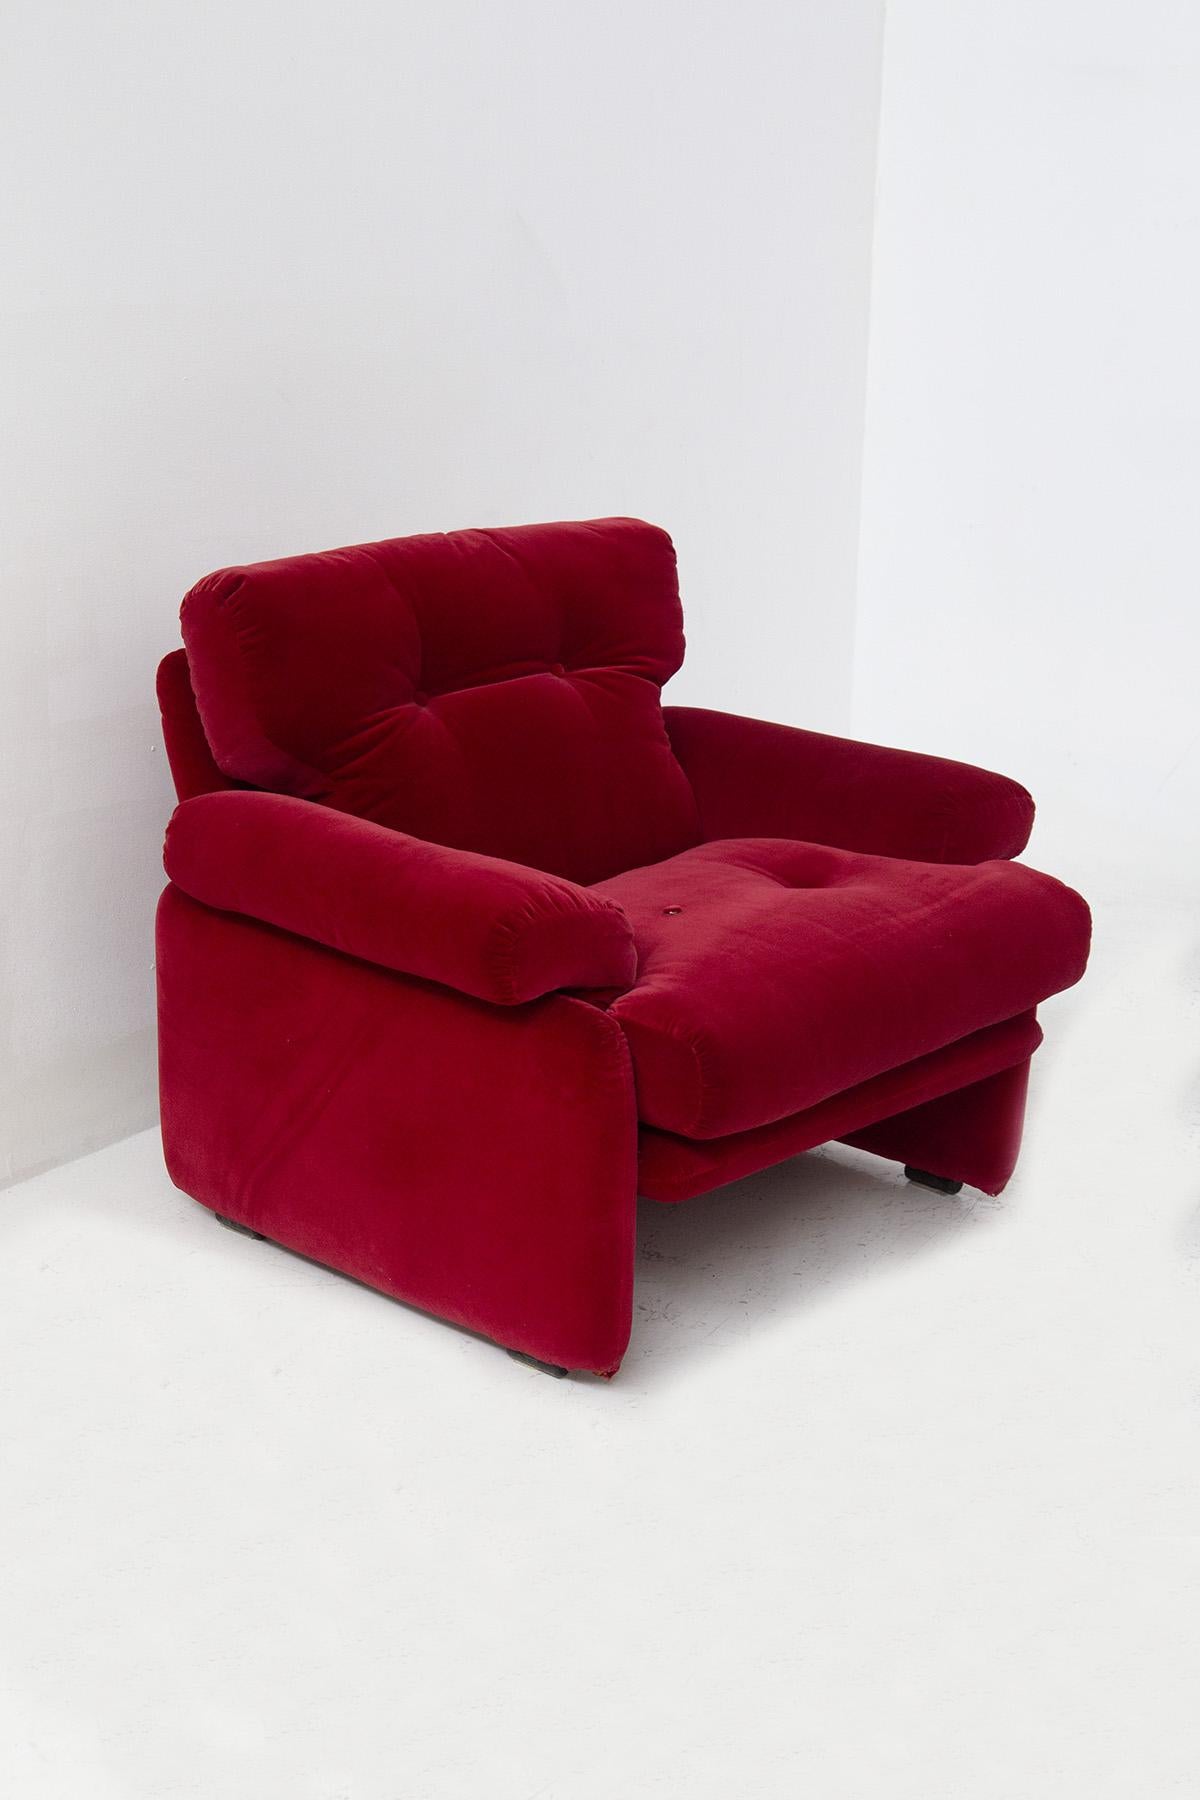 Striking red velvet armchairs from the 